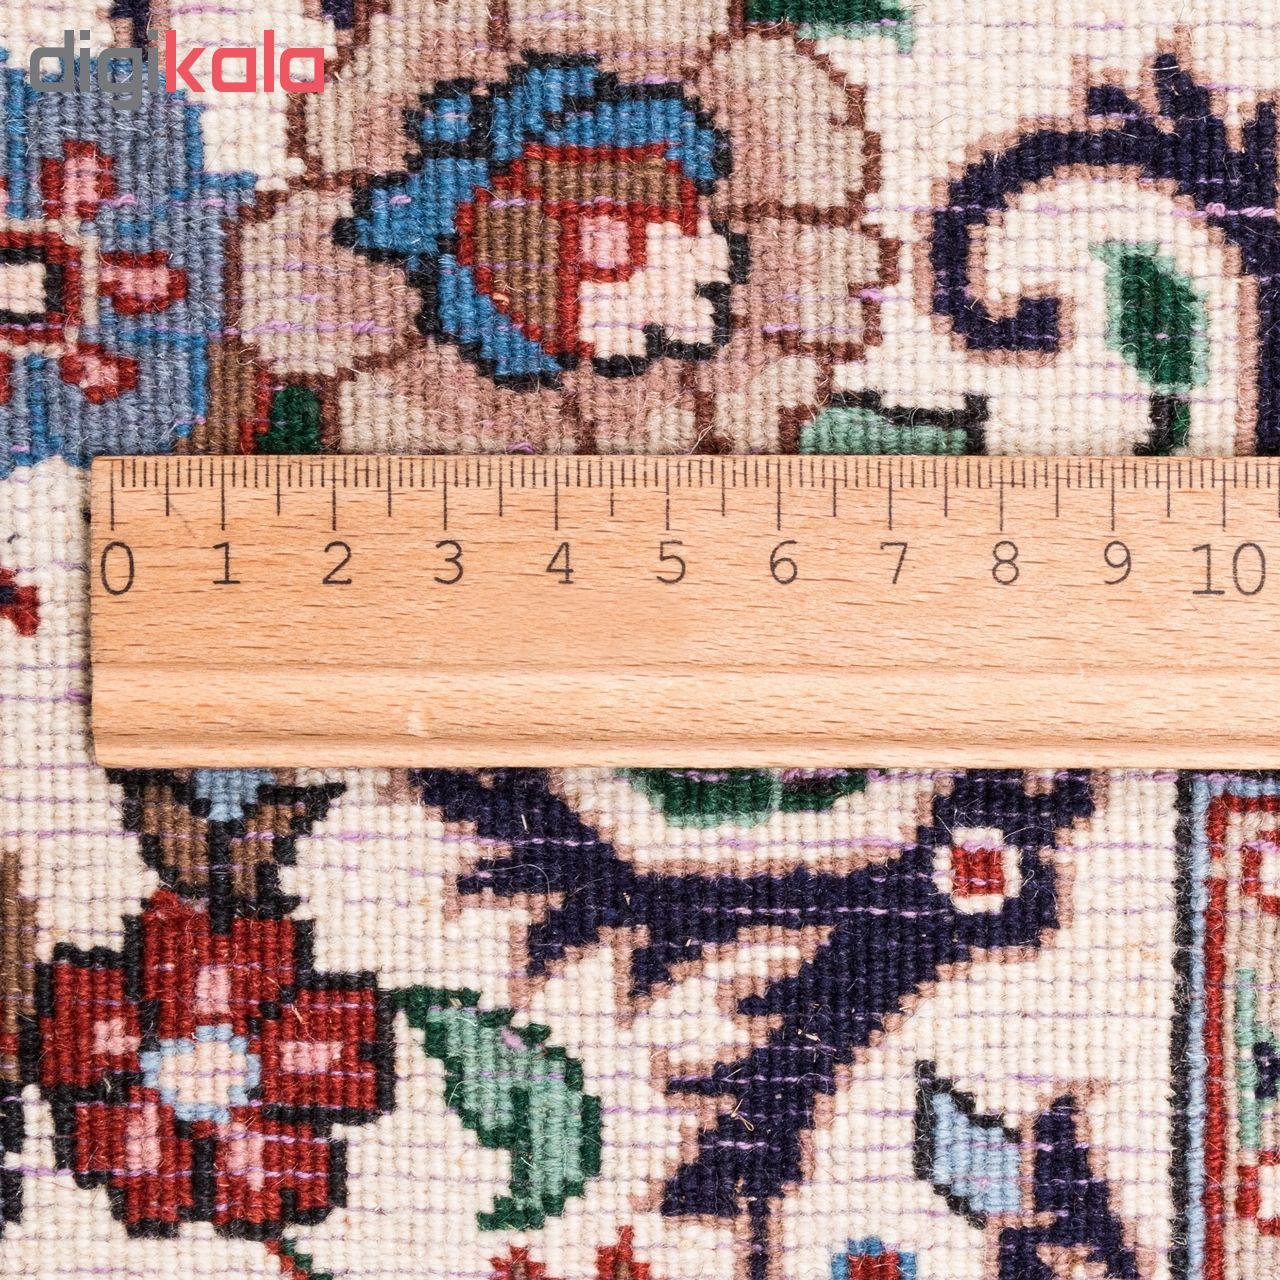 فرش دستباف پنج و نیم متری سی پرشیا کد 1748